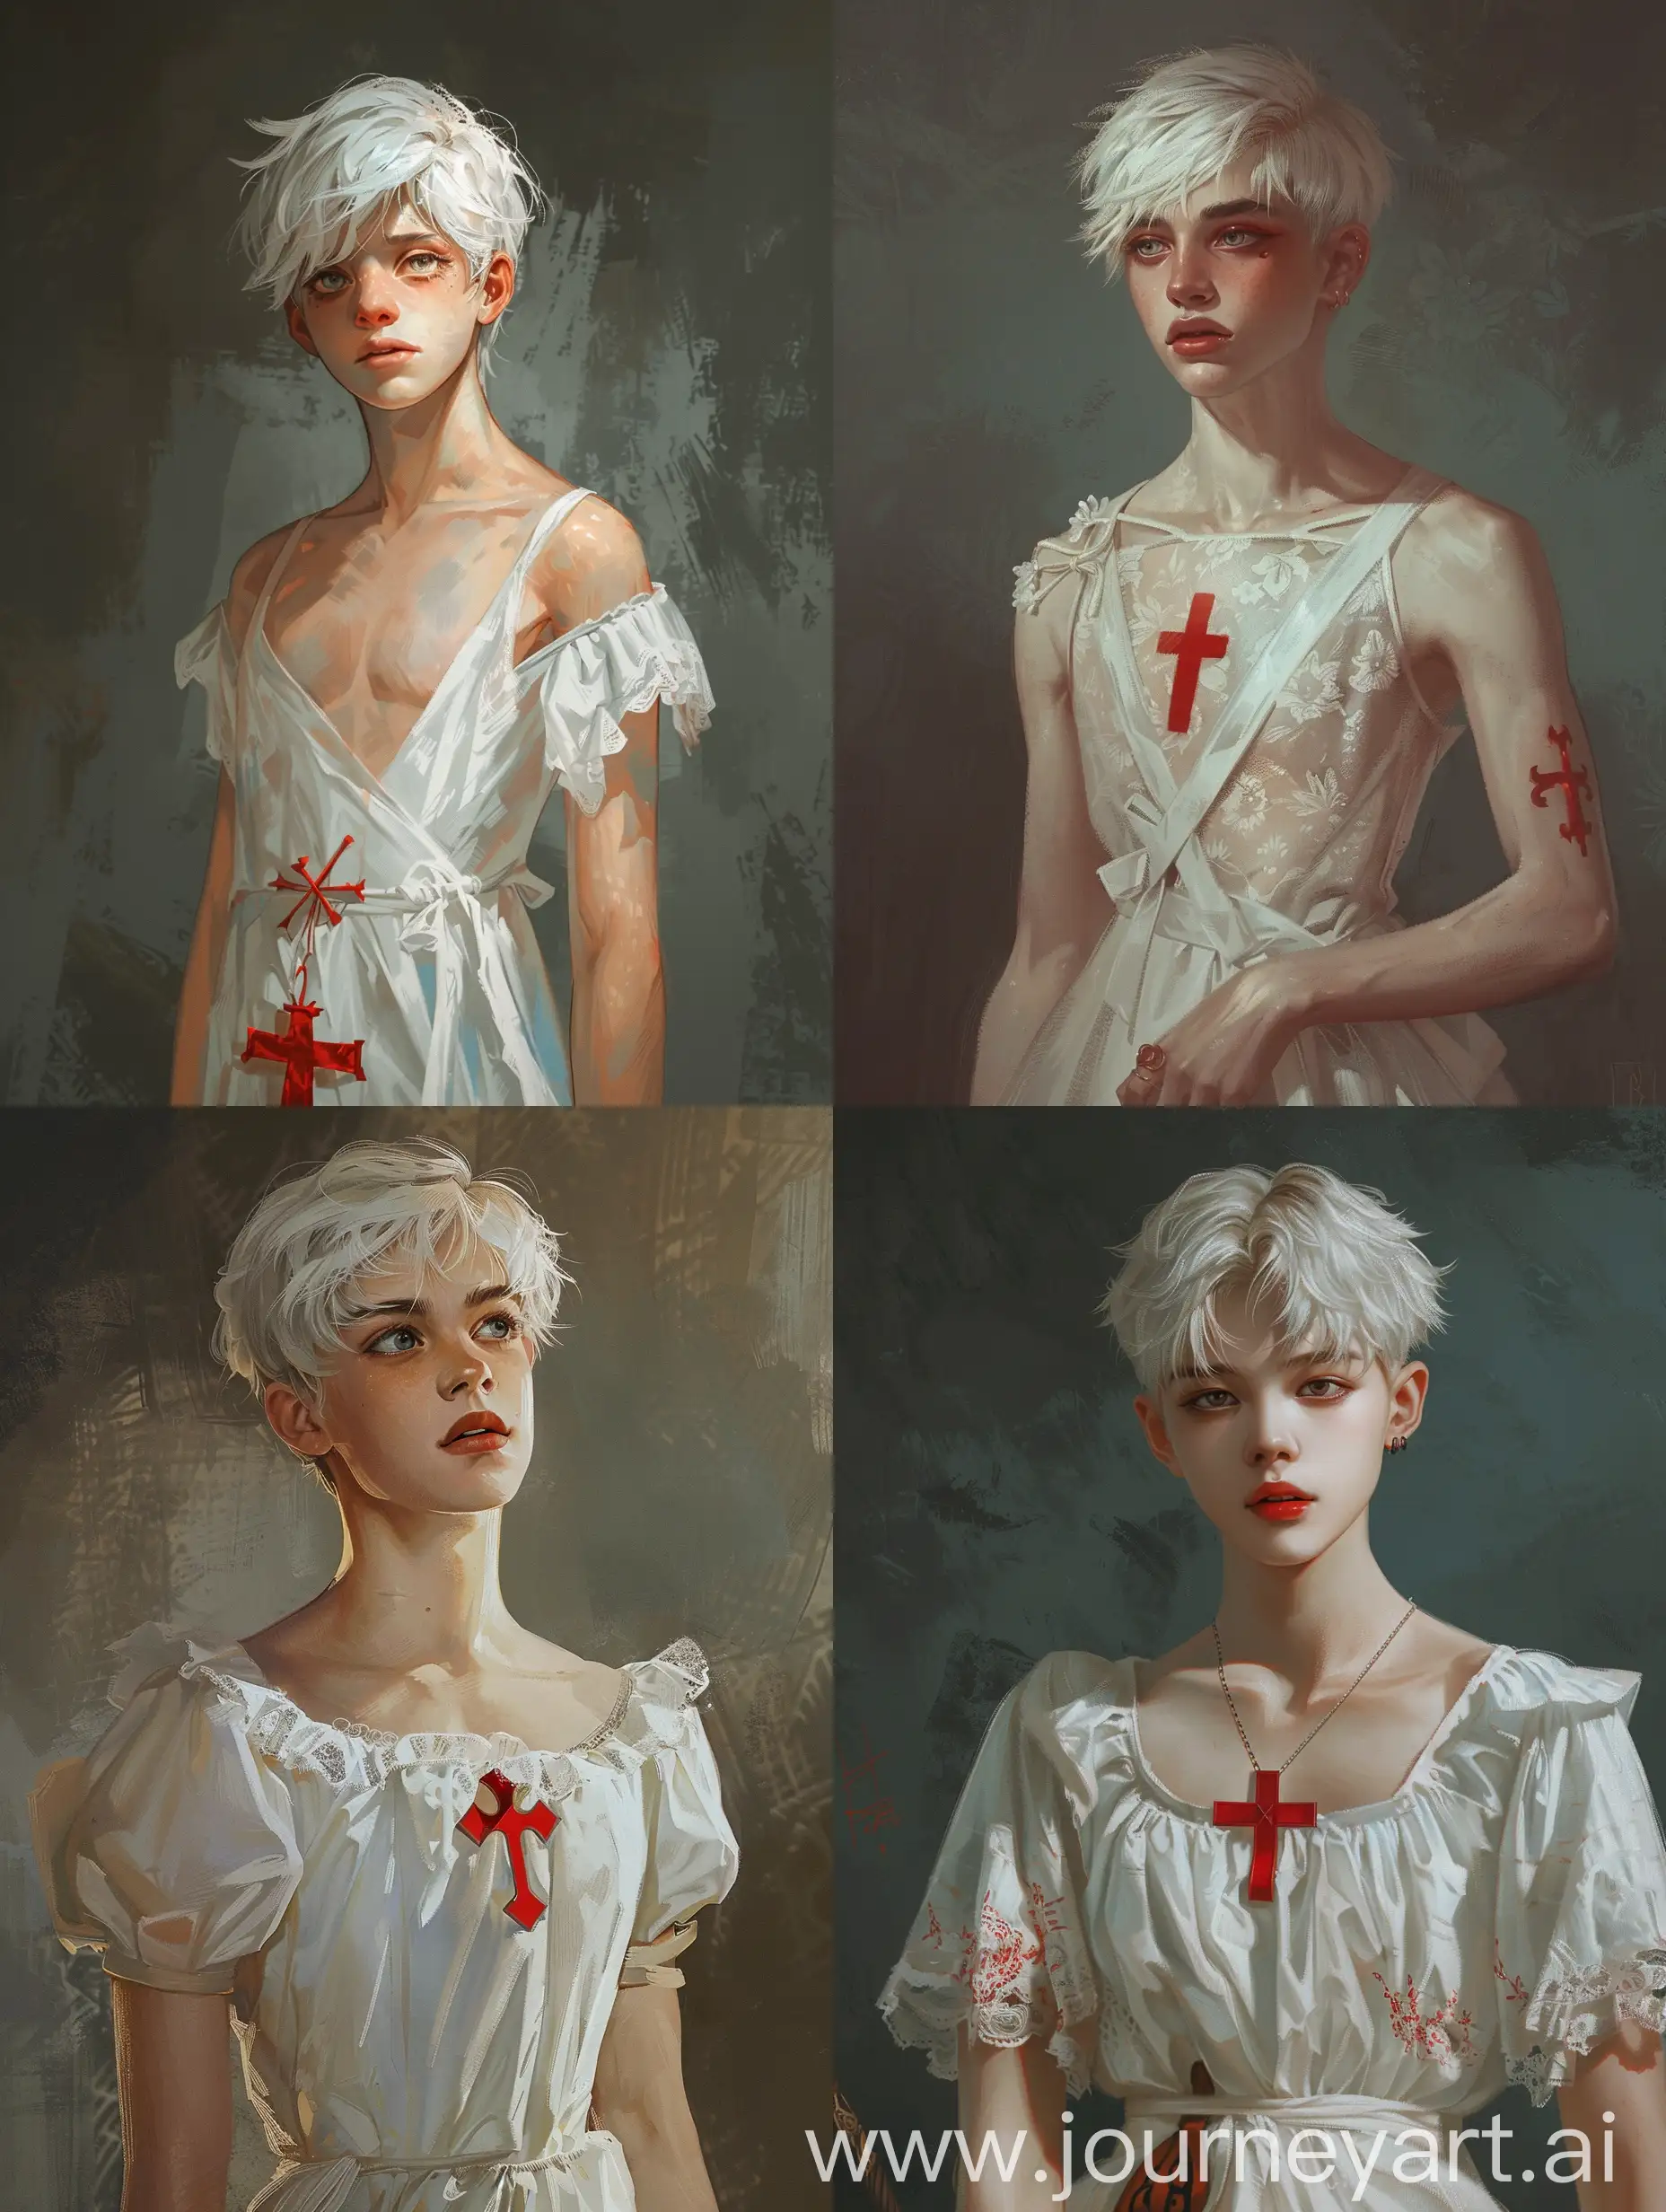 Fragile-Young-Man-in-Ethereal-White-Dress-Dark-Fantasy-Illustration